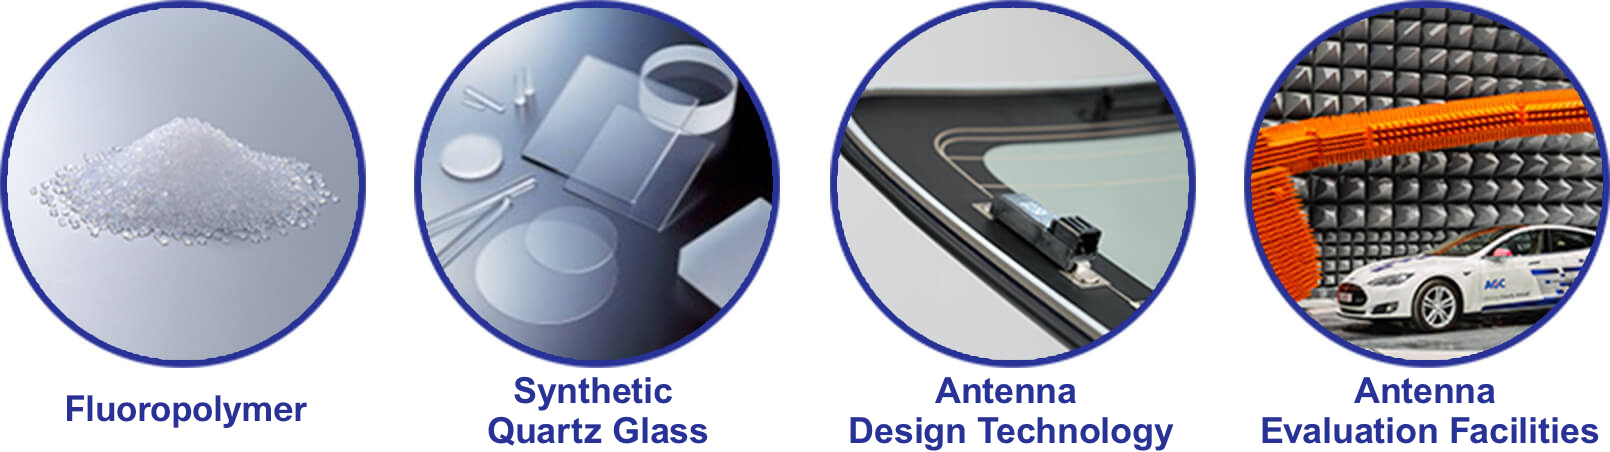 Fluoroplastic,Synthetic Quartz Glass,Antenna Design Technology,Antenna Evaluation Facilities